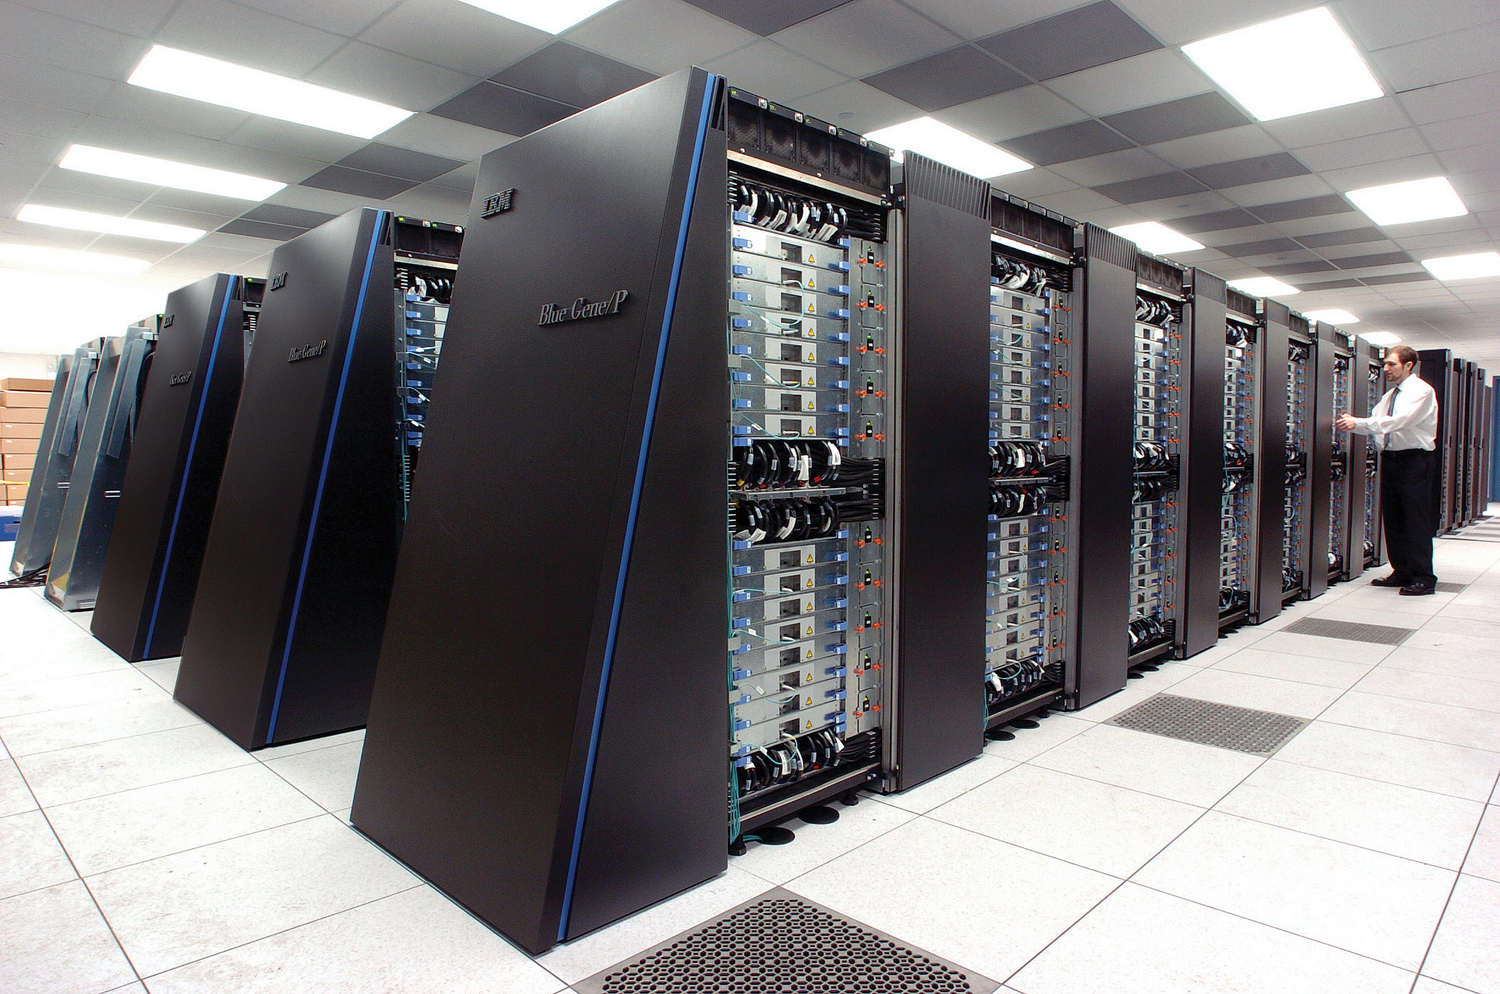 The Blue Gene/P supercomputer at Argonne National Lab